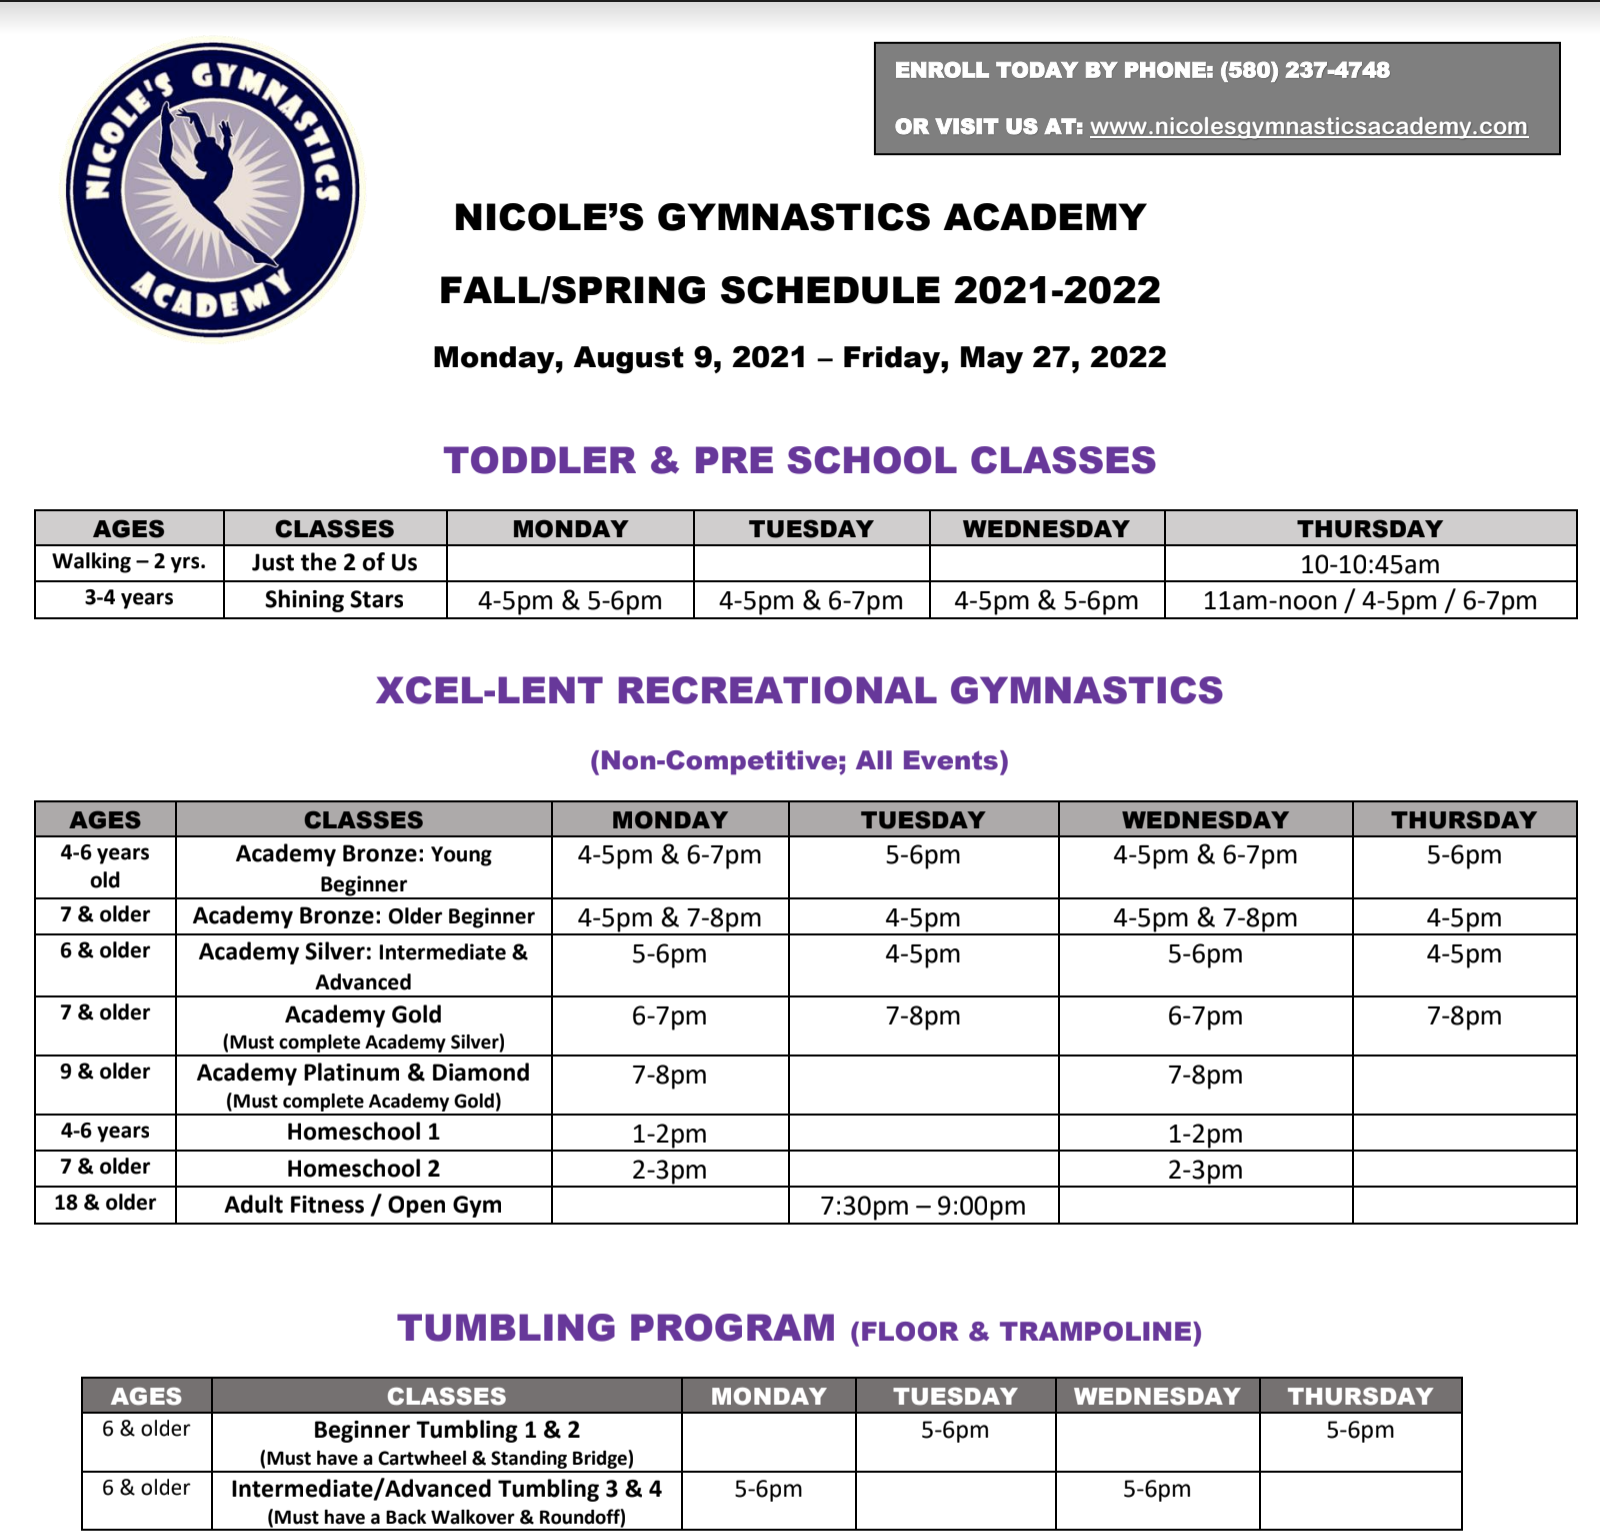 Nicole's Gymnastics Academy Fall/Spring Schedule 2021-2022.